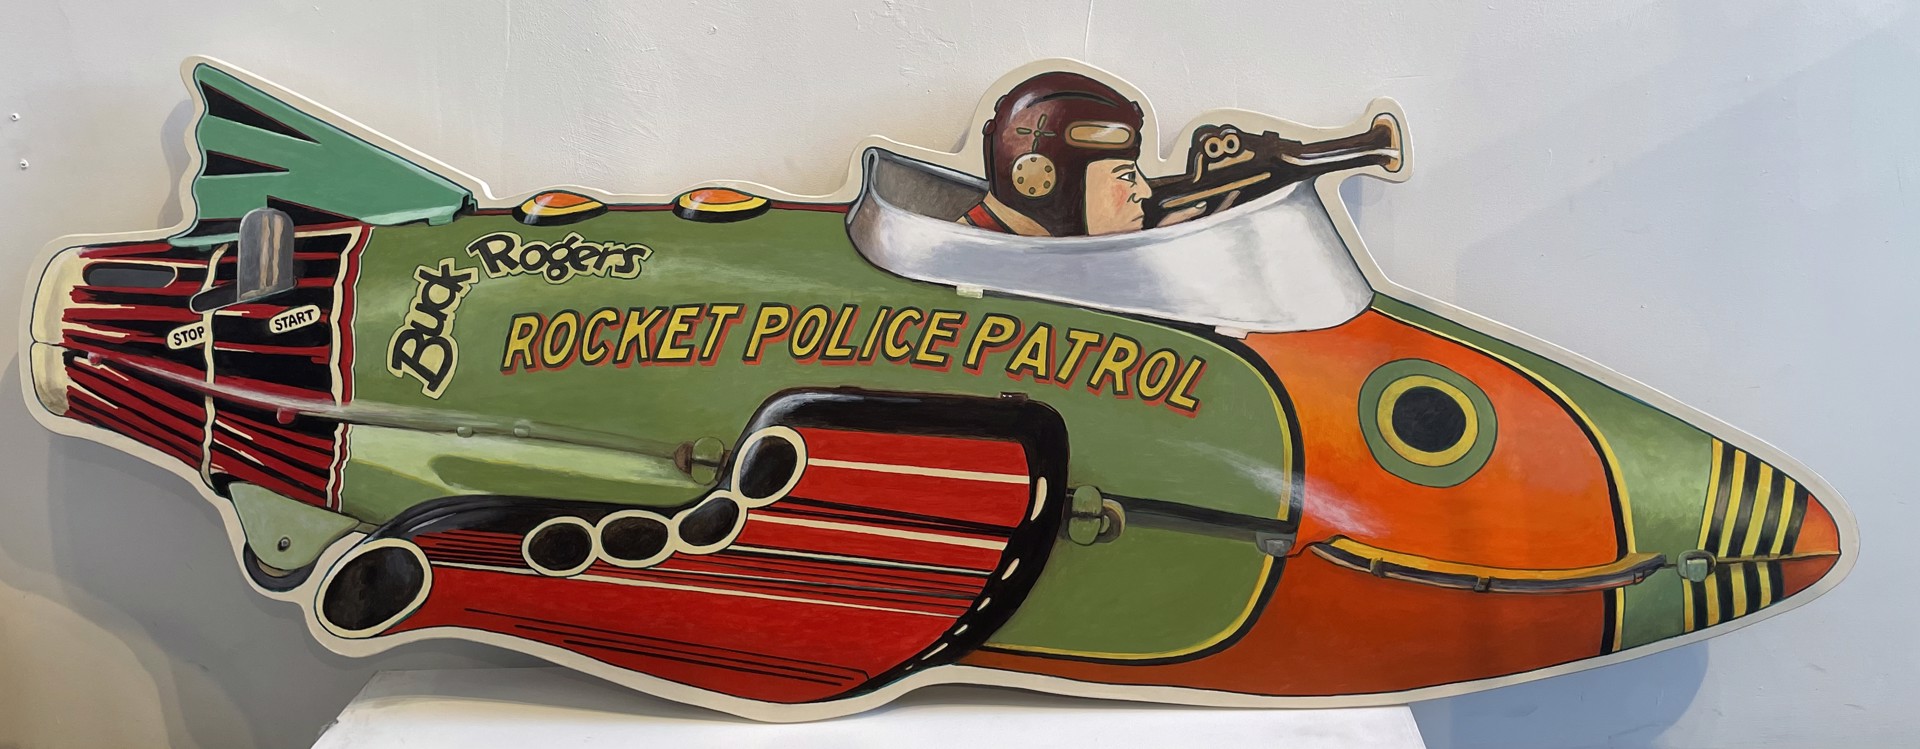 Rocket Police Patrol by Ralph Allen Massey